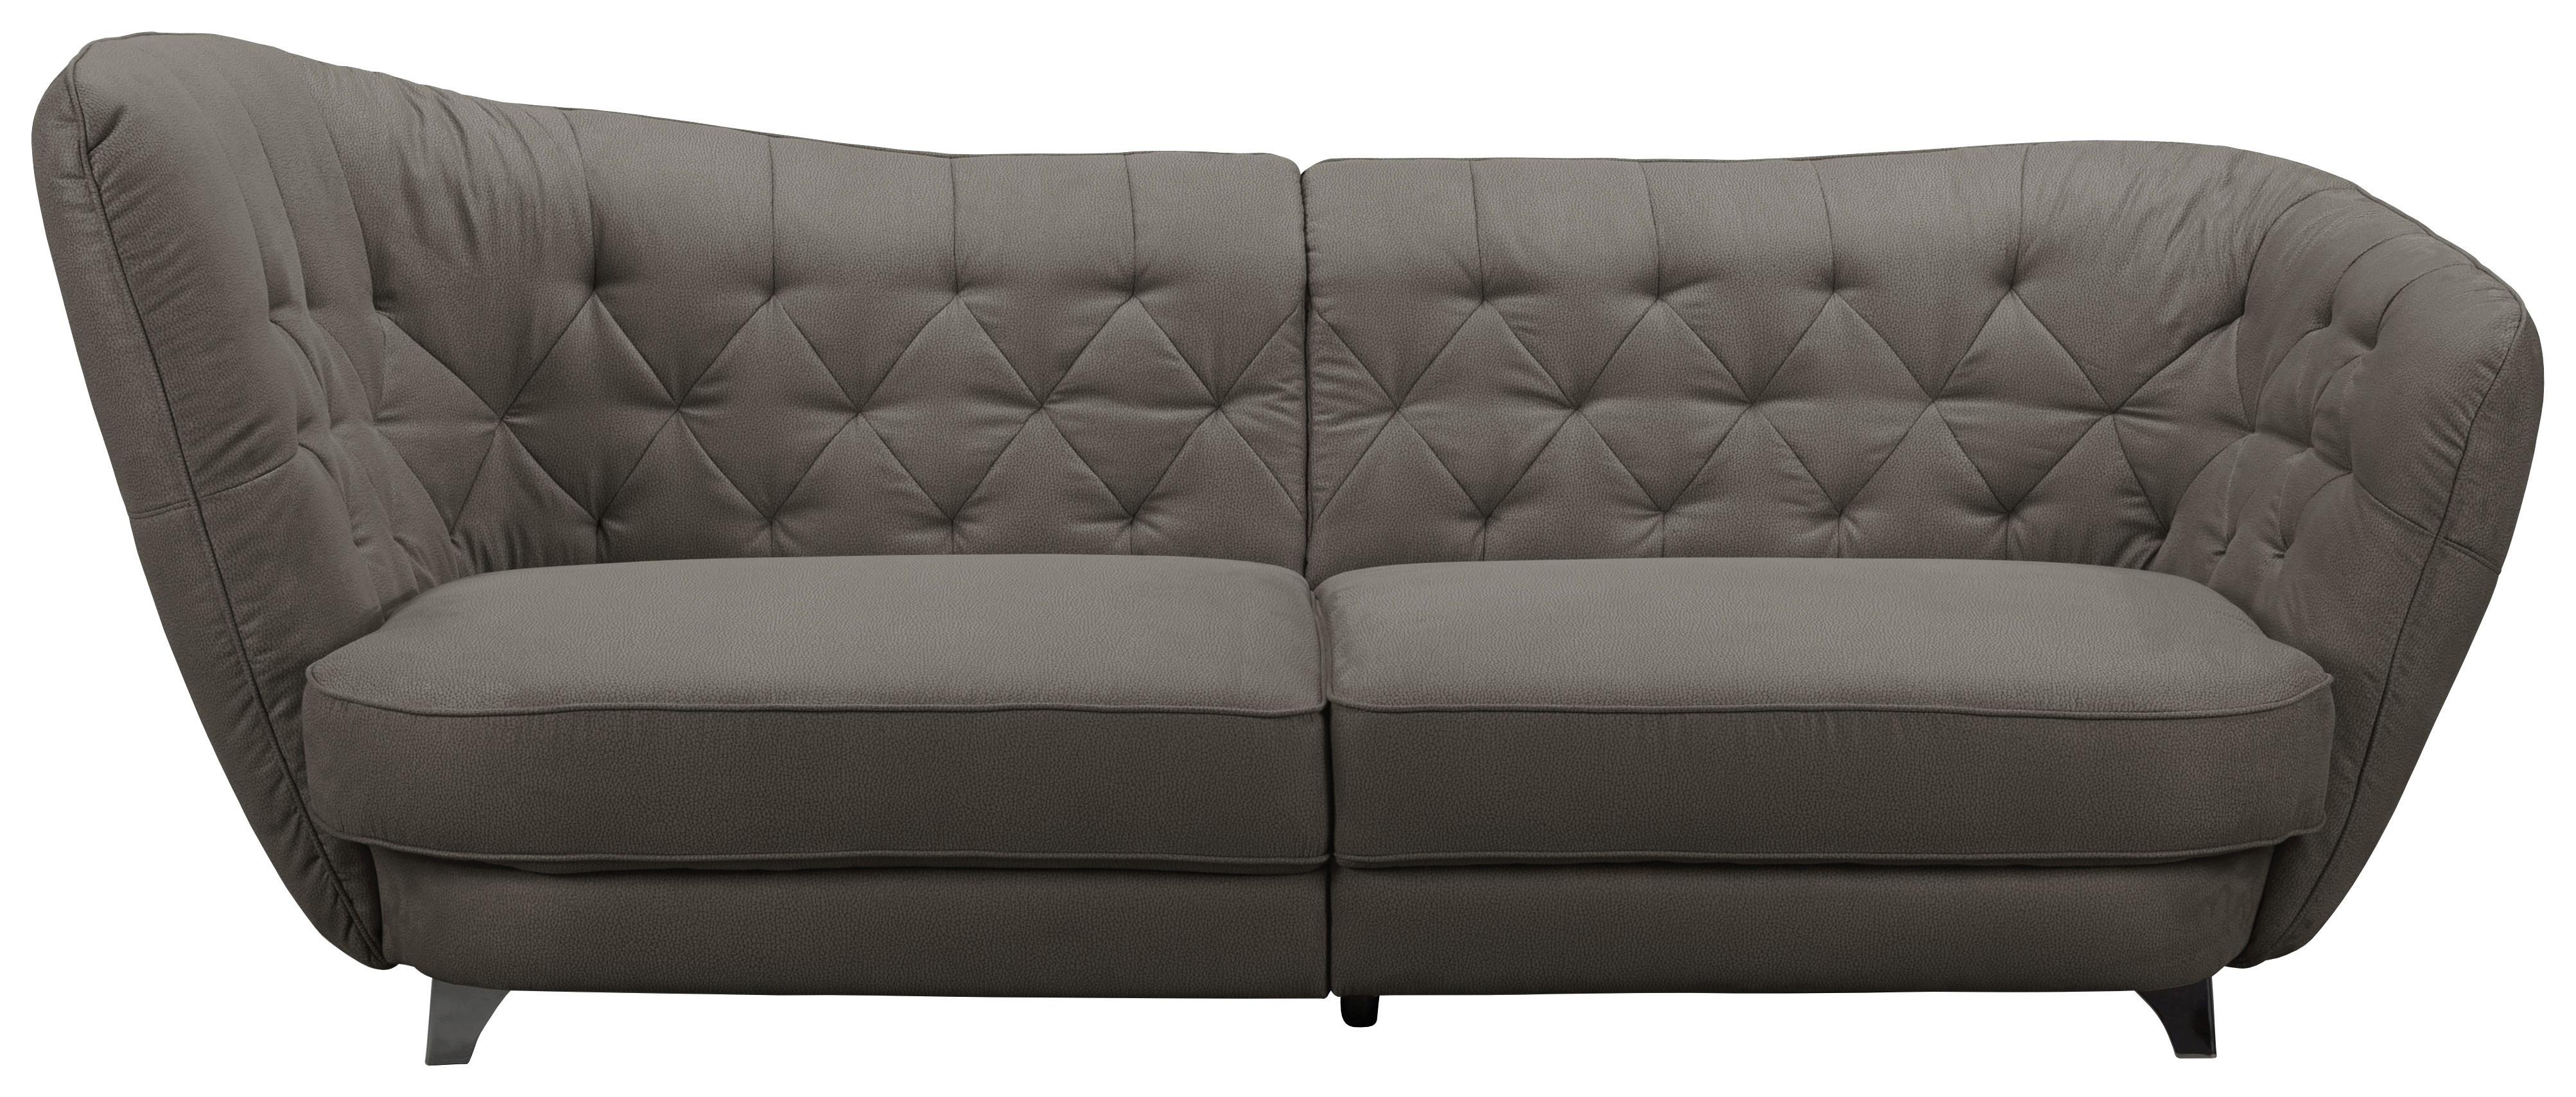 Big Sofa mit Echtem Rücken Retro B: 256 cm Dunkelbraun - Chromfarben/Dunkelbraun, MODERN, Textil (256/85/115cm) - MID.YOU